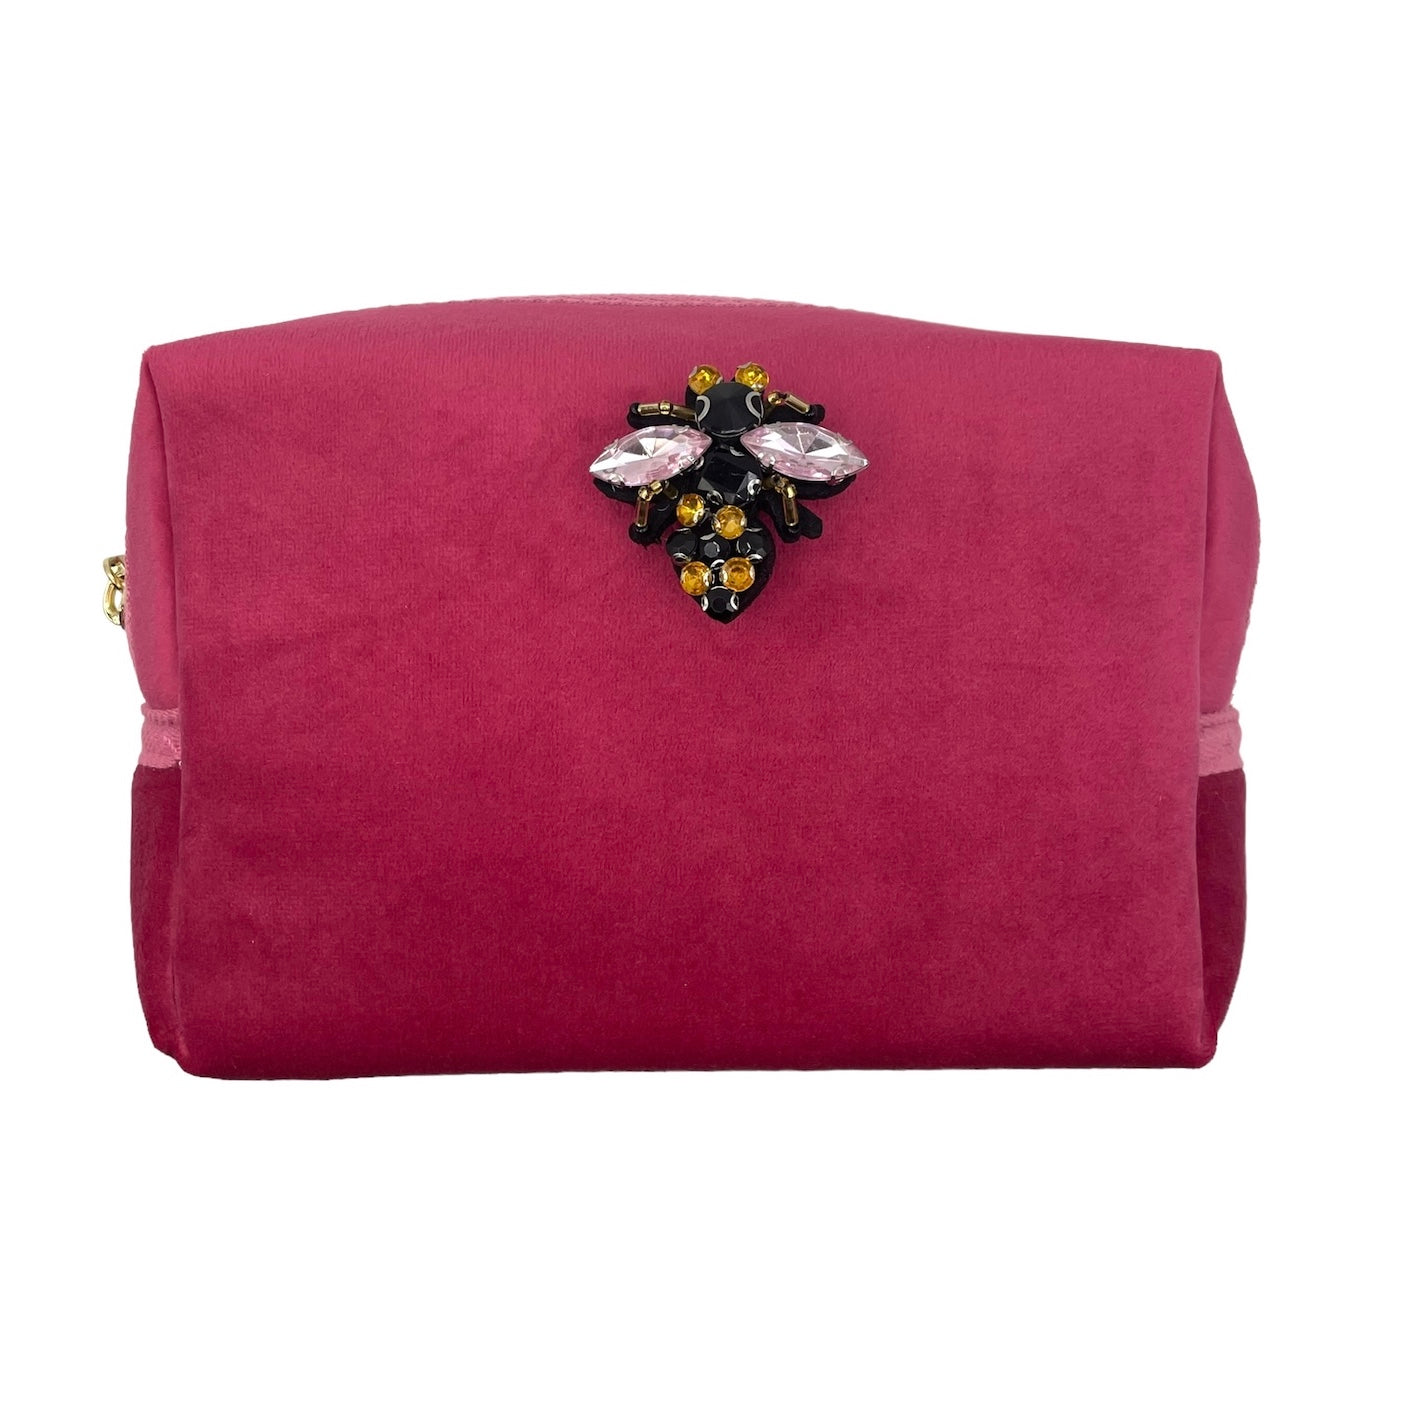 Bright pink make-up bag & Italian bee pin - recycled velvet